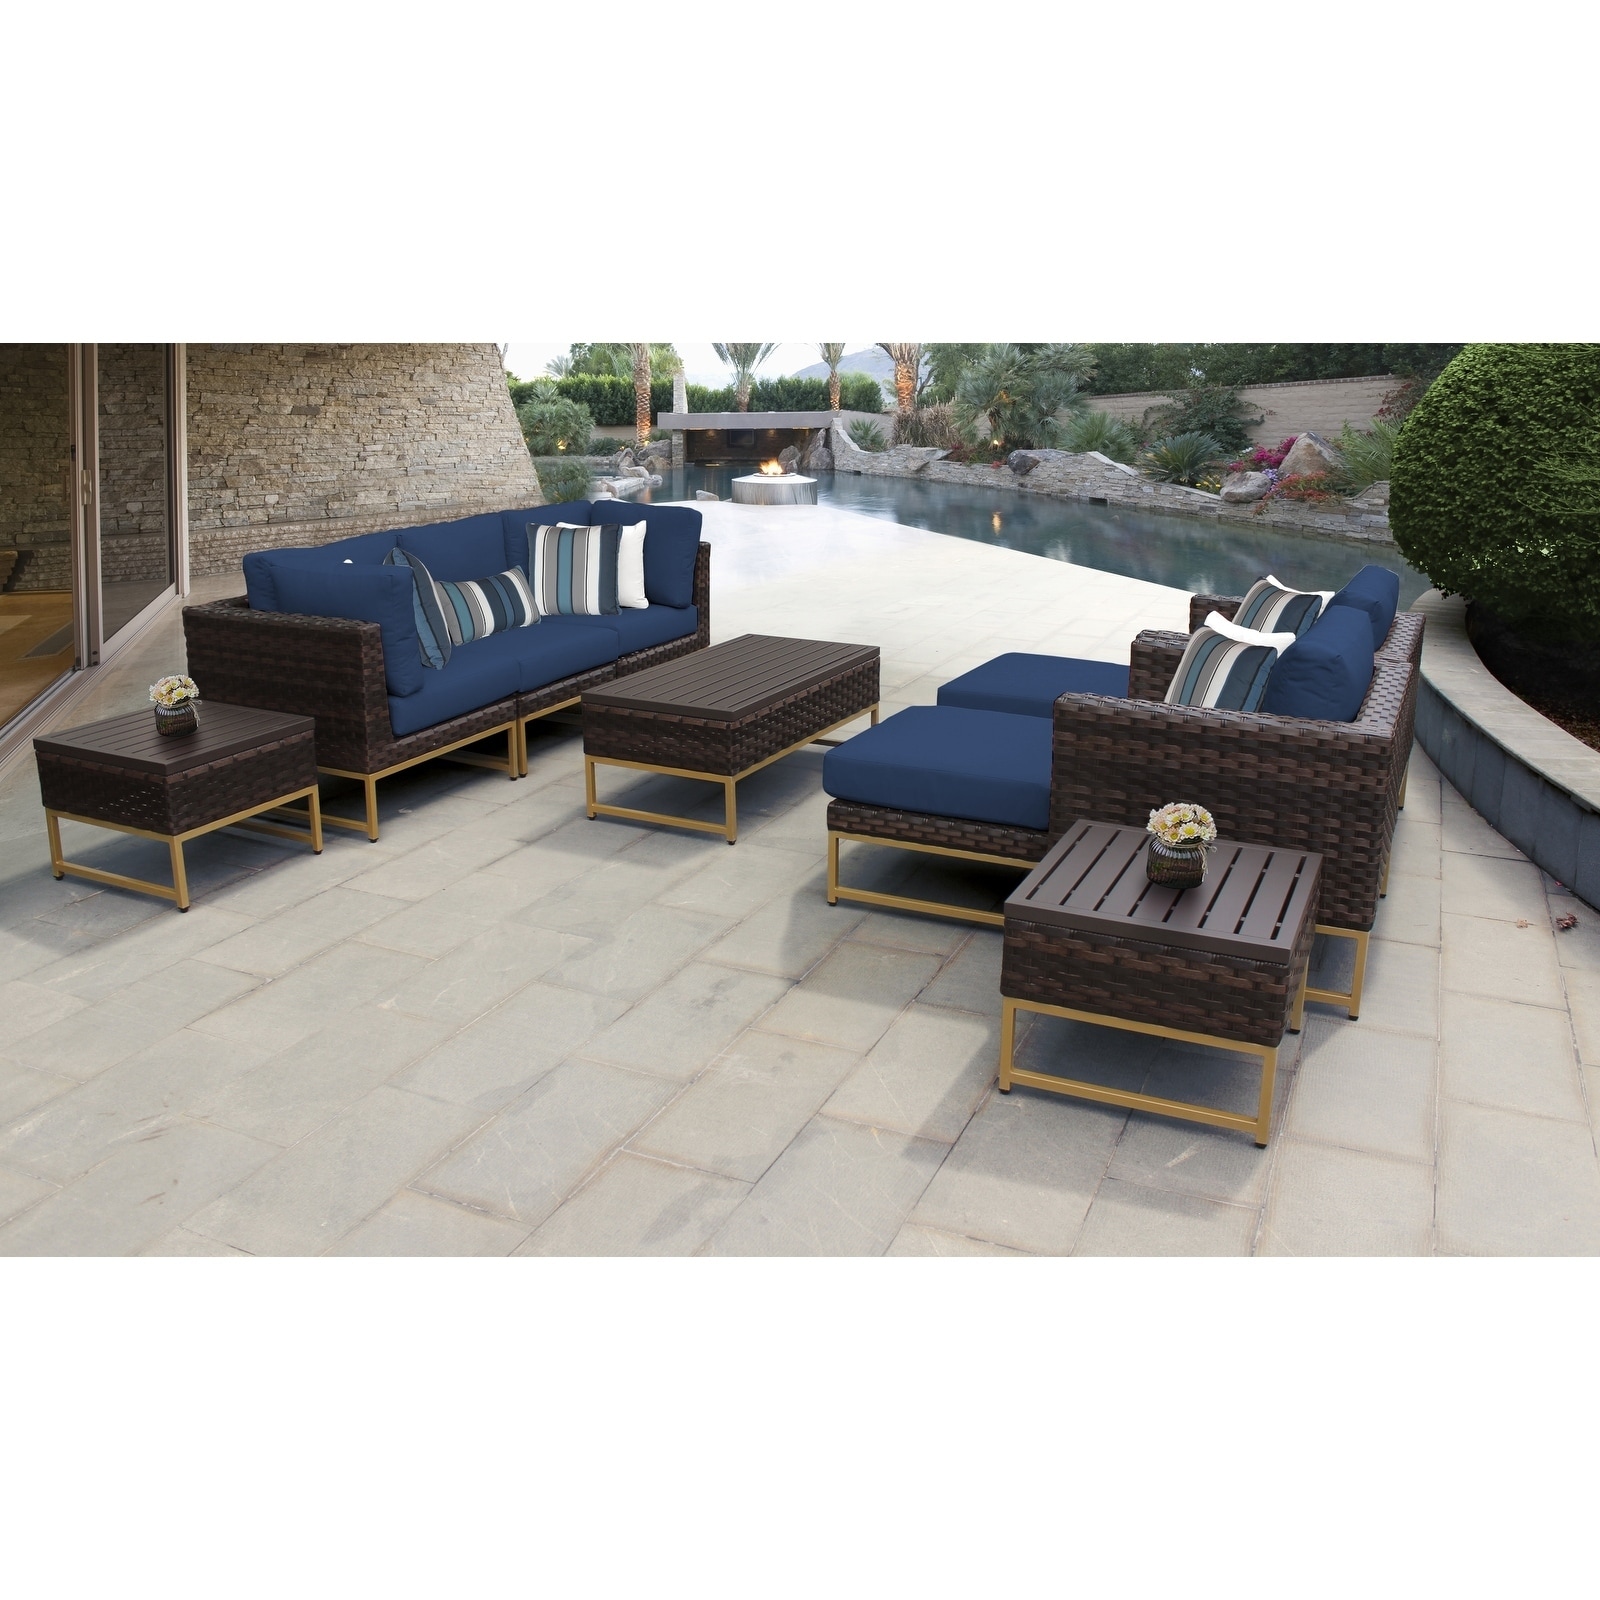 Amalfi 10 Piece Outdoor Wicker Patio Furniture Set 10c -  TK Classics, BRCLN-10c-GLD-NAVY